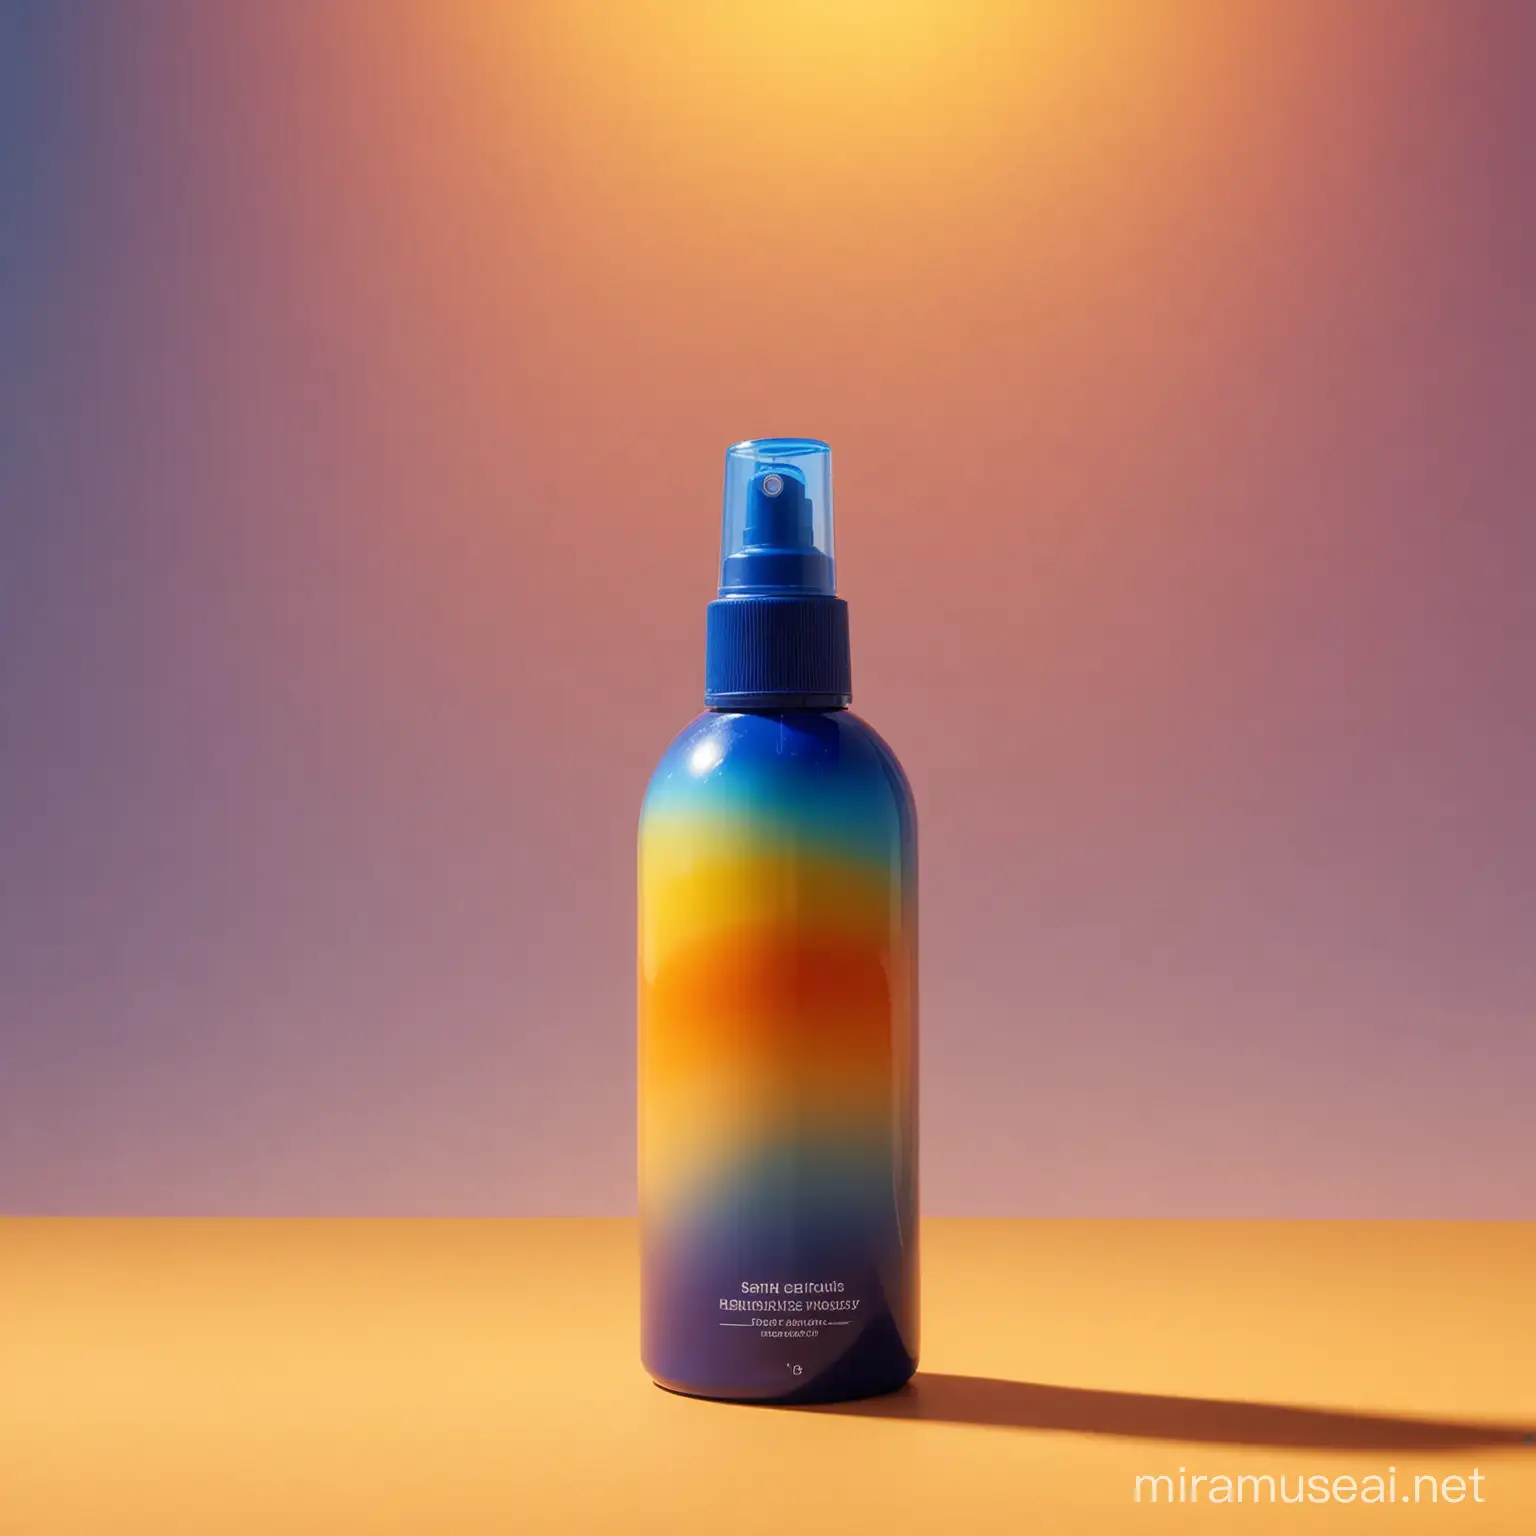 Gradient Spray Bottle Against Vibrant Sky with Sun